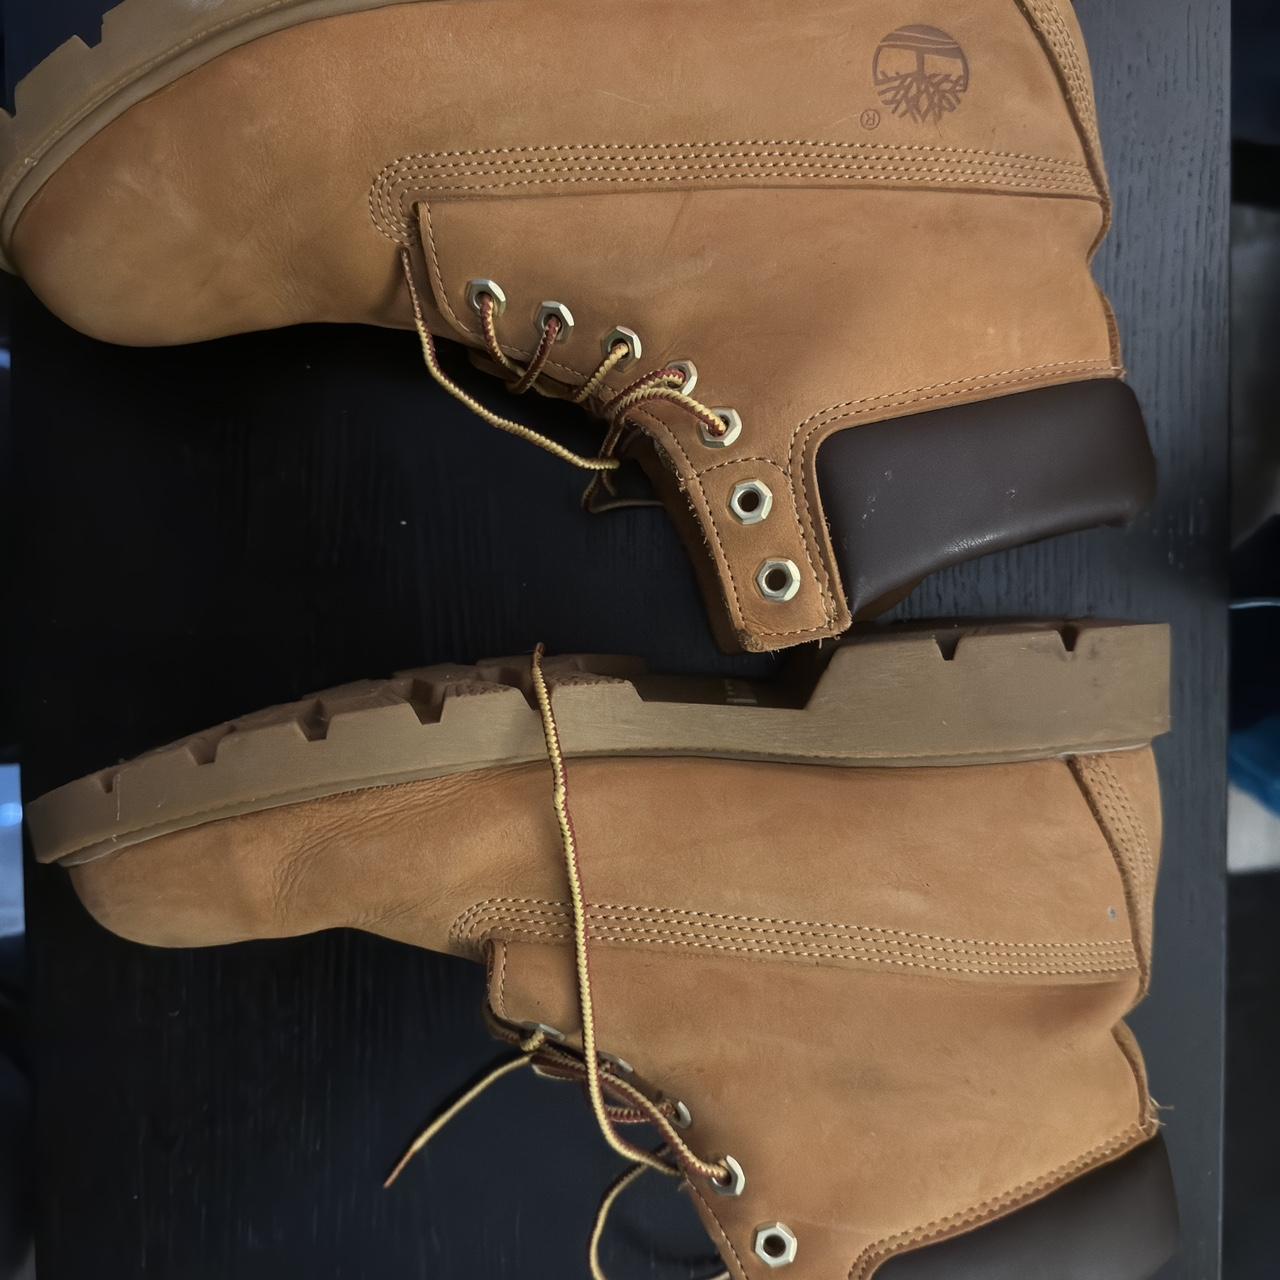 Timberland Men's Boots (3)